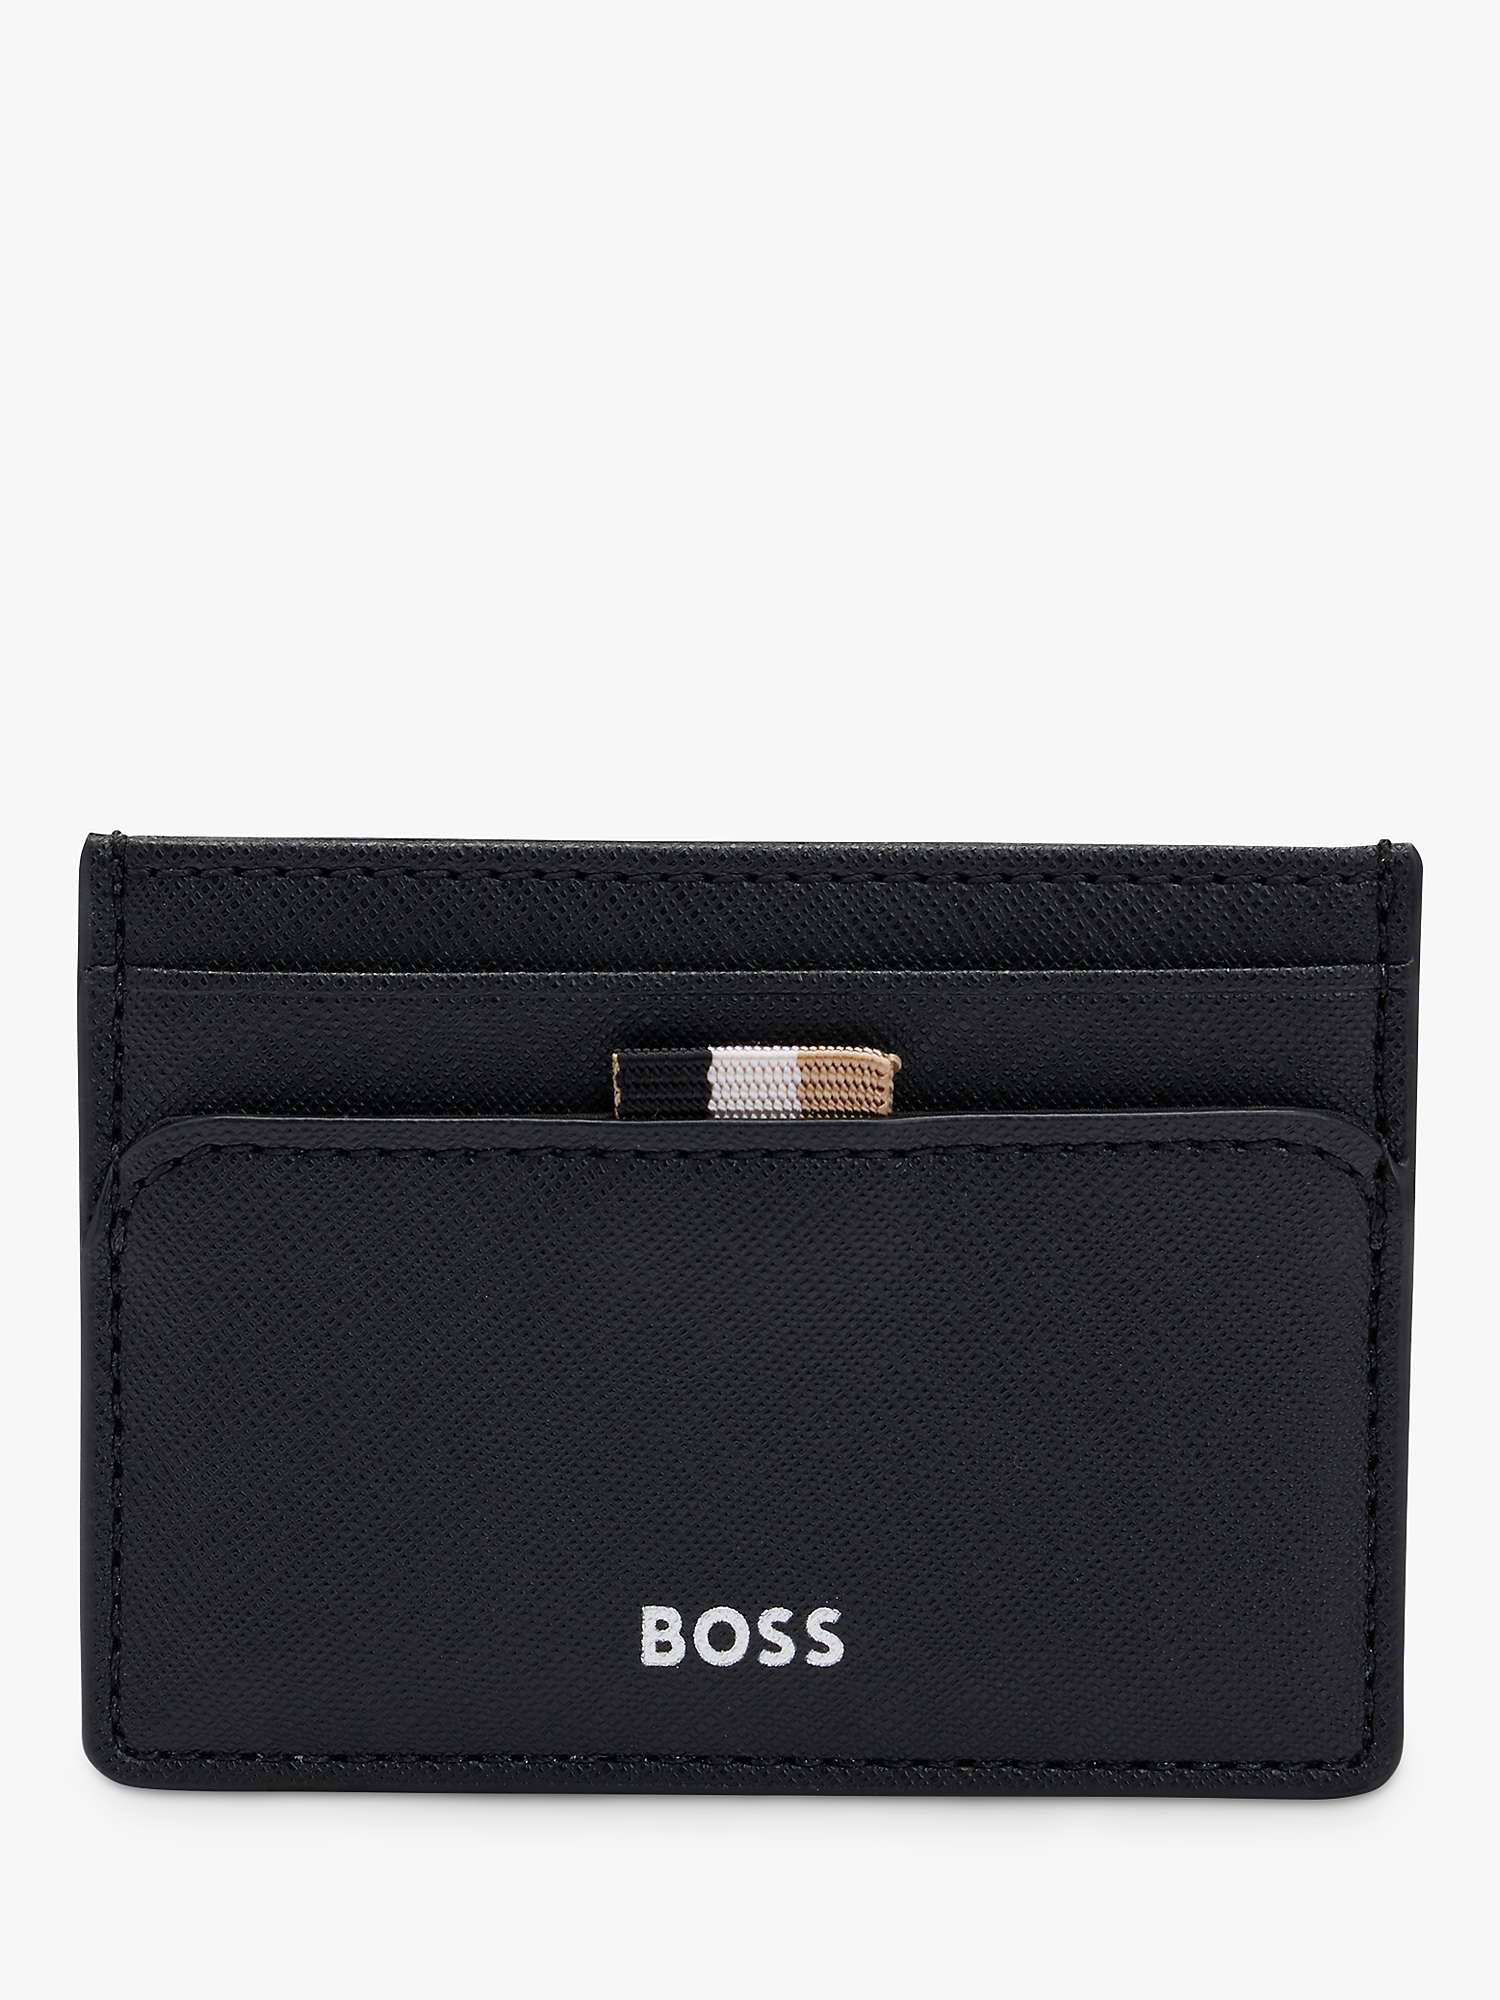 Buy BOSS Zair Leather Cardholder, Black Online at johnlewis.com